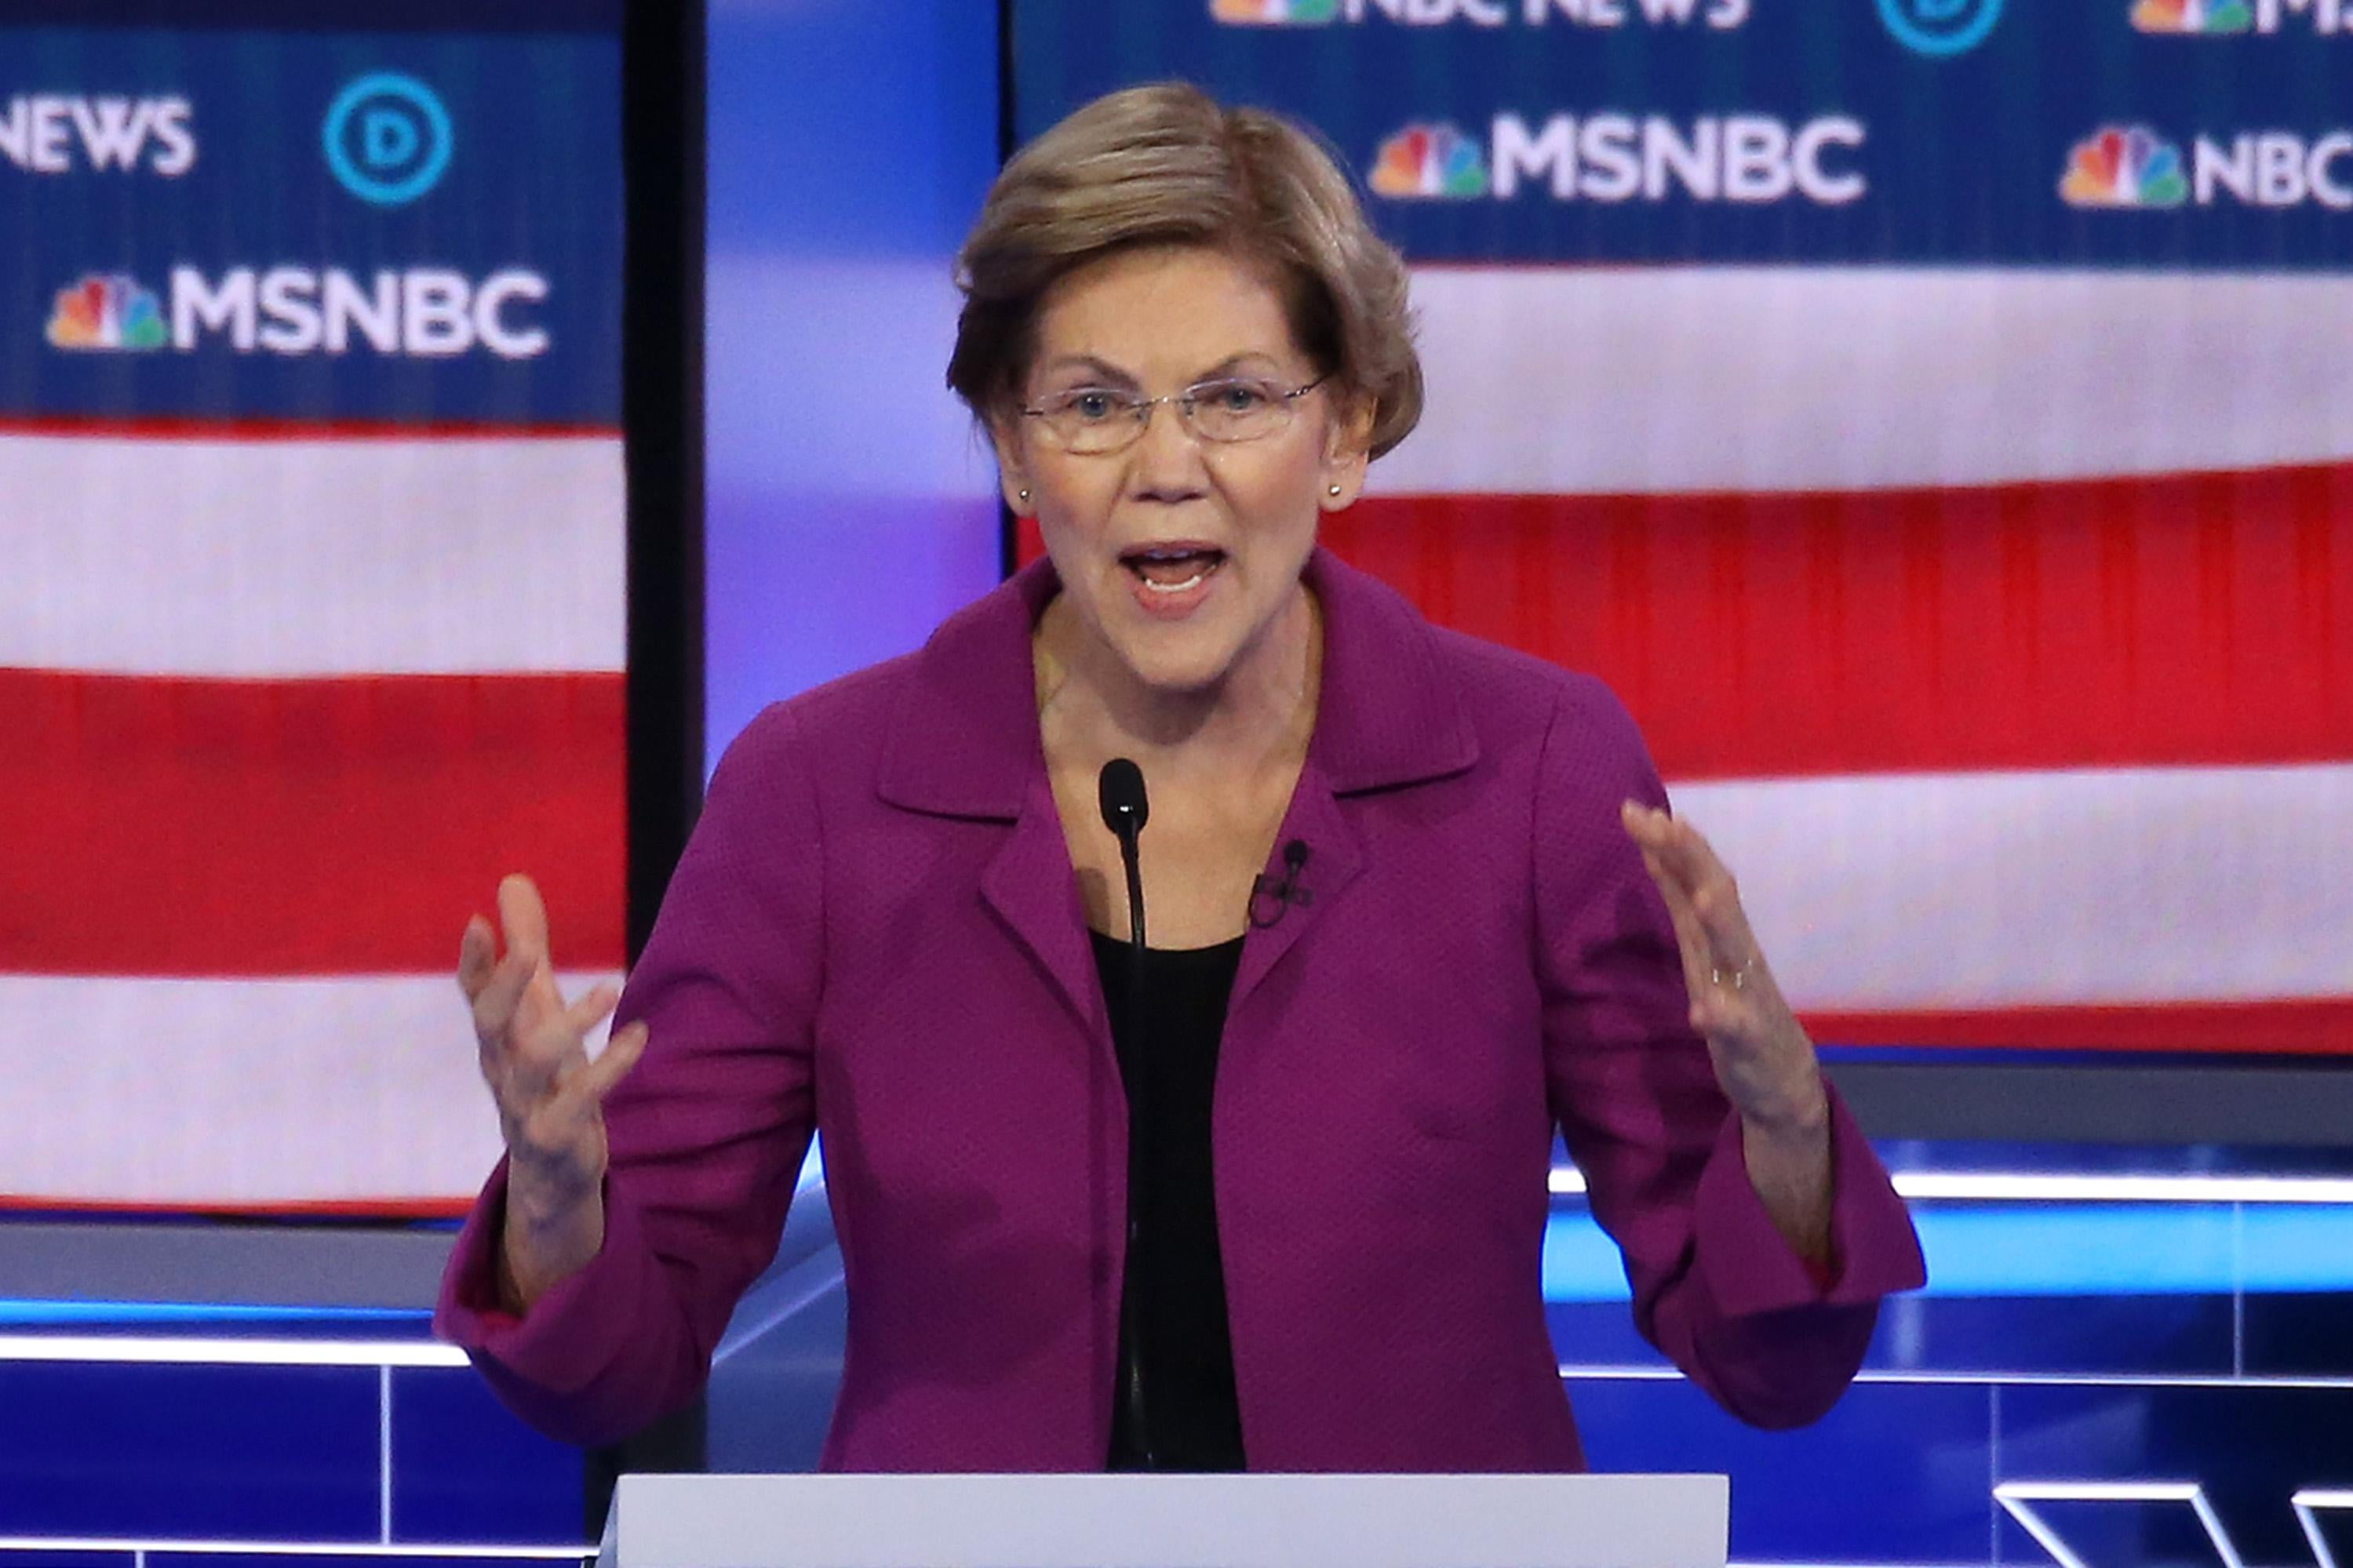 Elizabeth Warren raises her hands while speaking into a microphone.